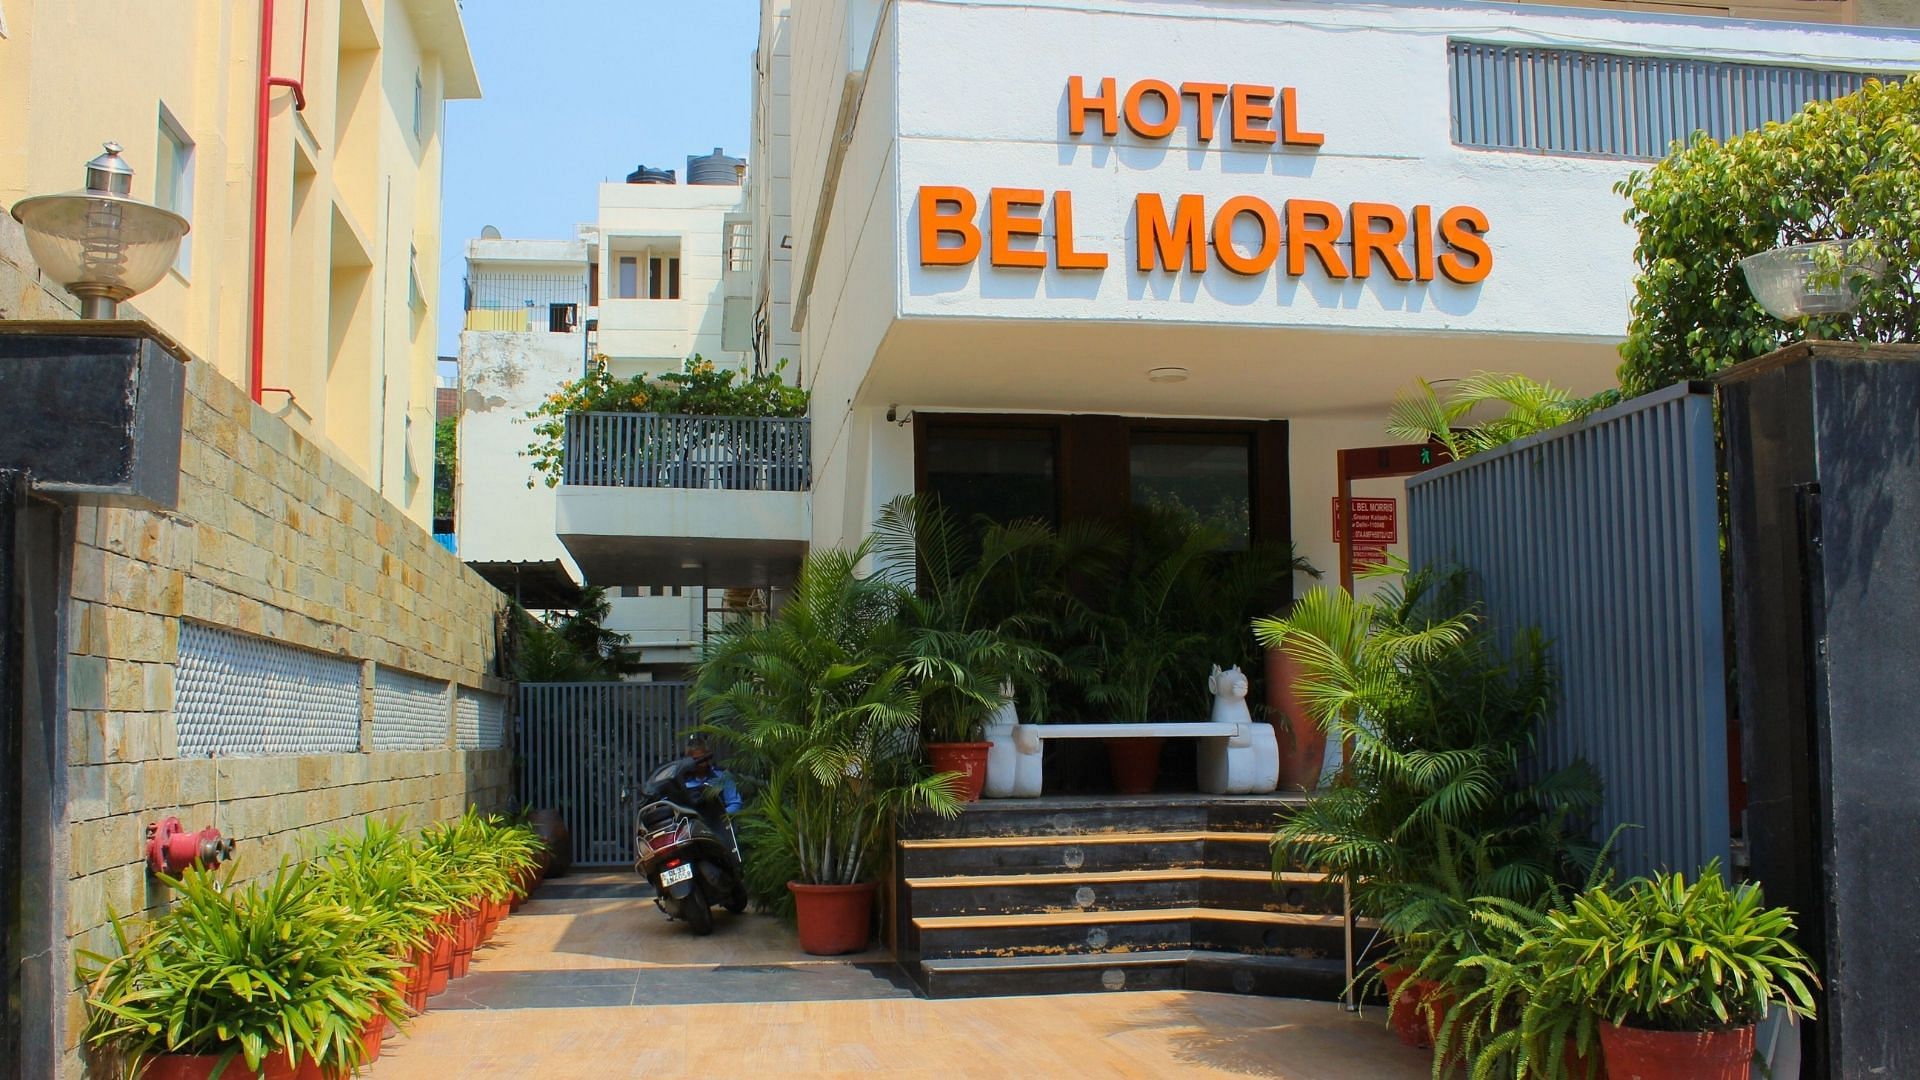 Hotel Bel Morris in Greater Kailash 2, Delhi